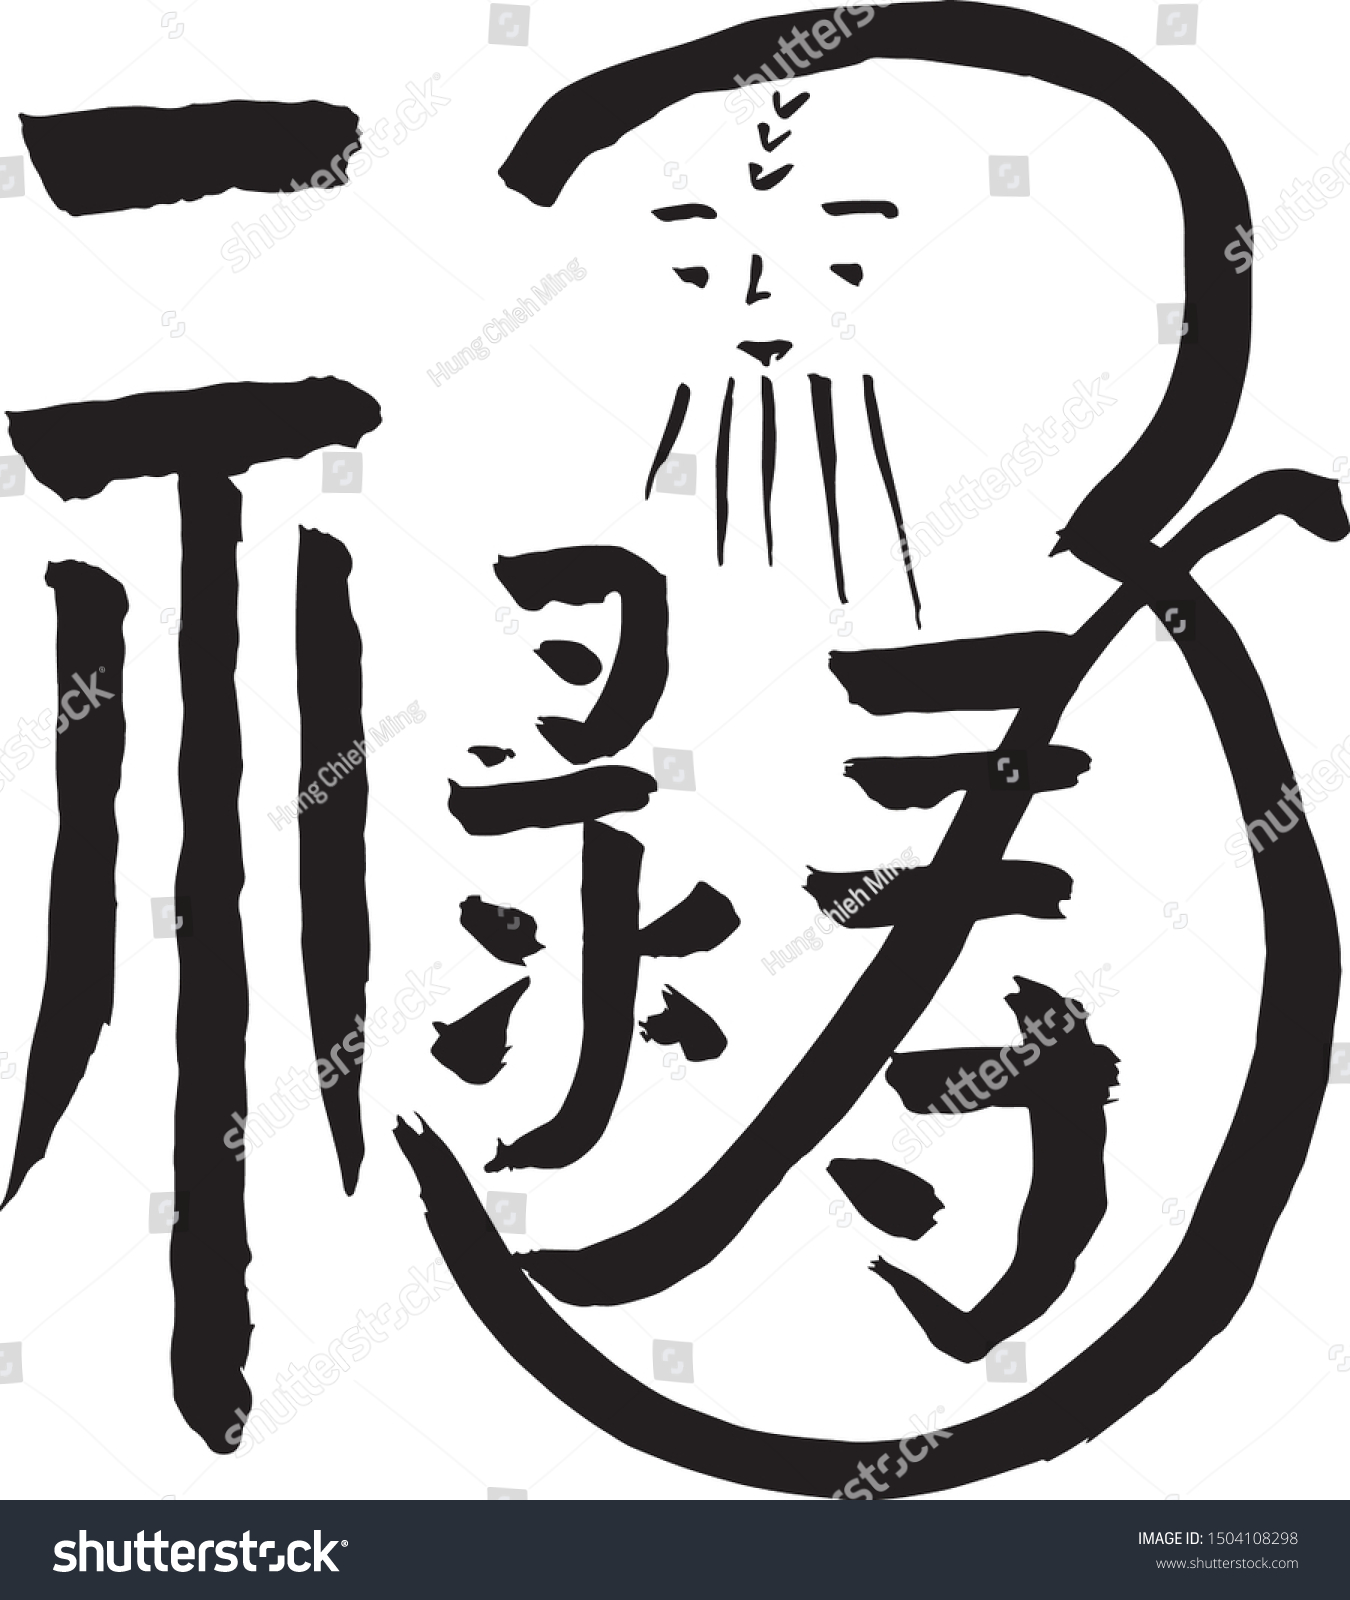 chinese cursive